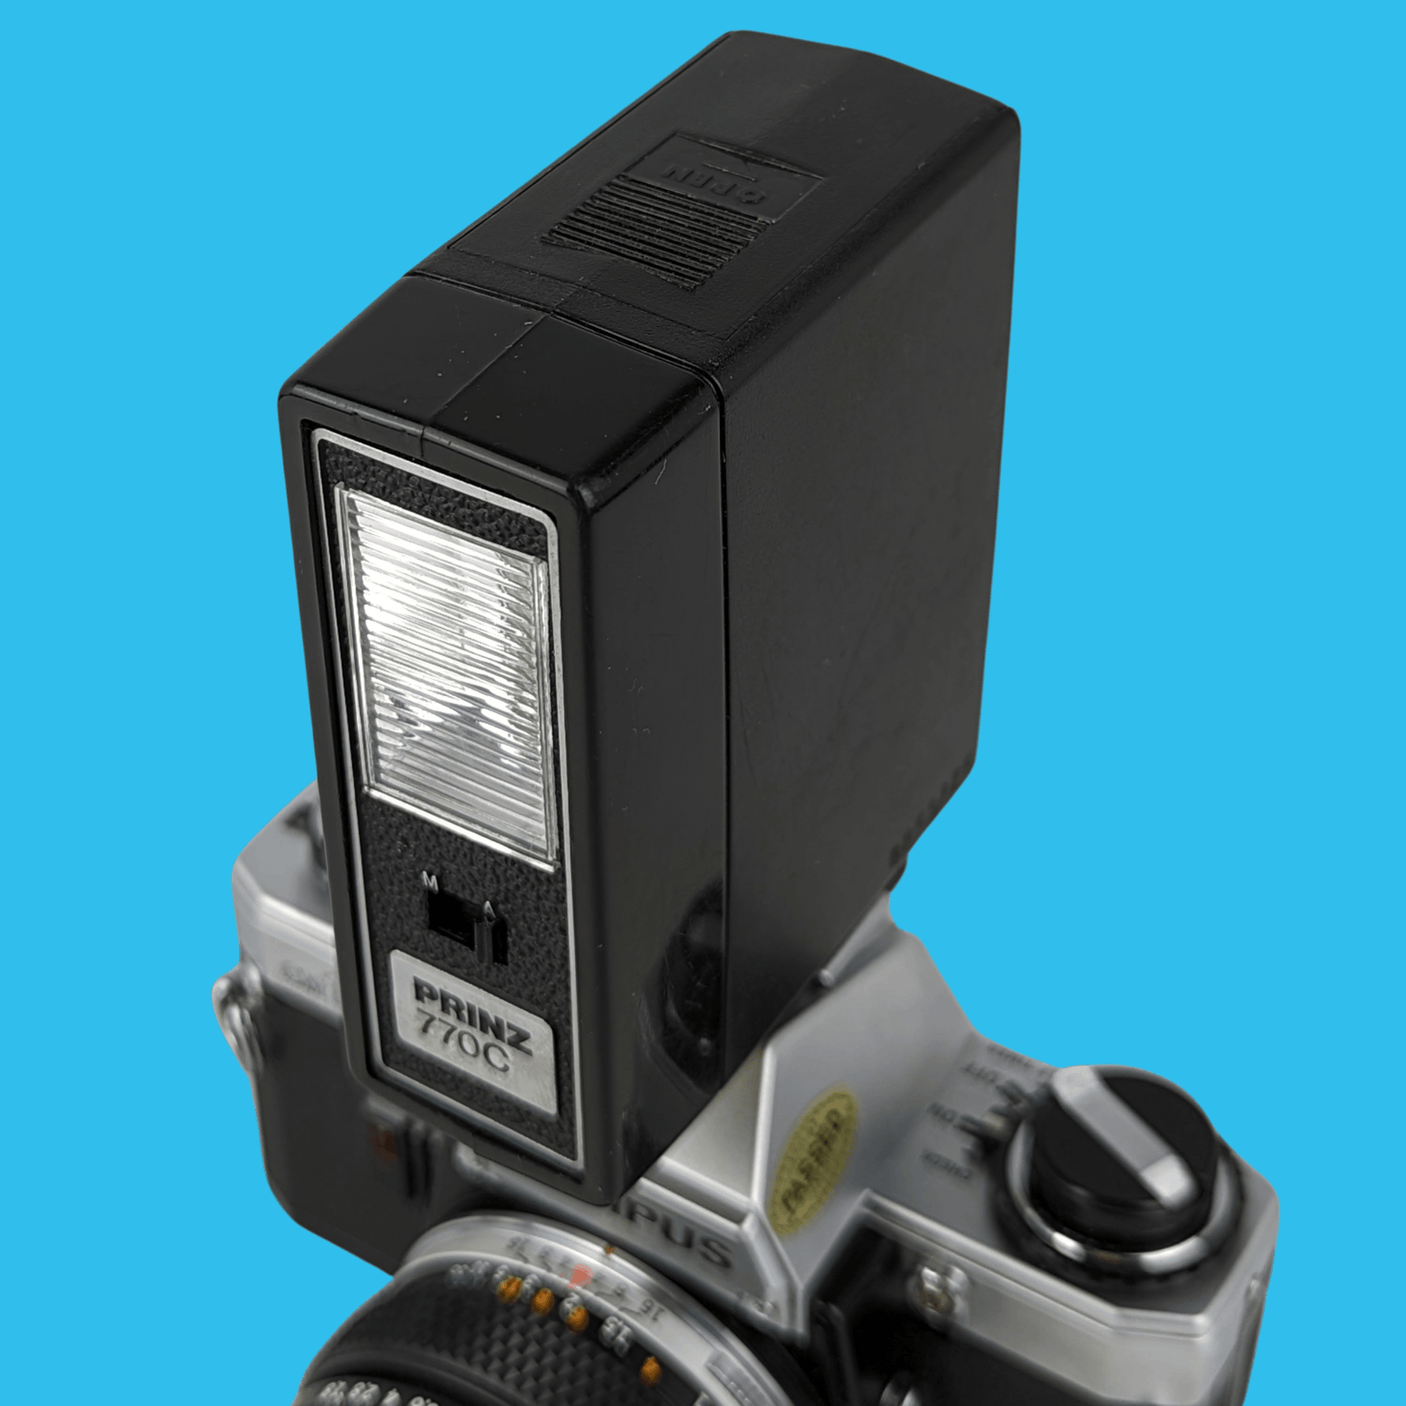 Prinz 770C External Flash Unit for 35mm Film Camera